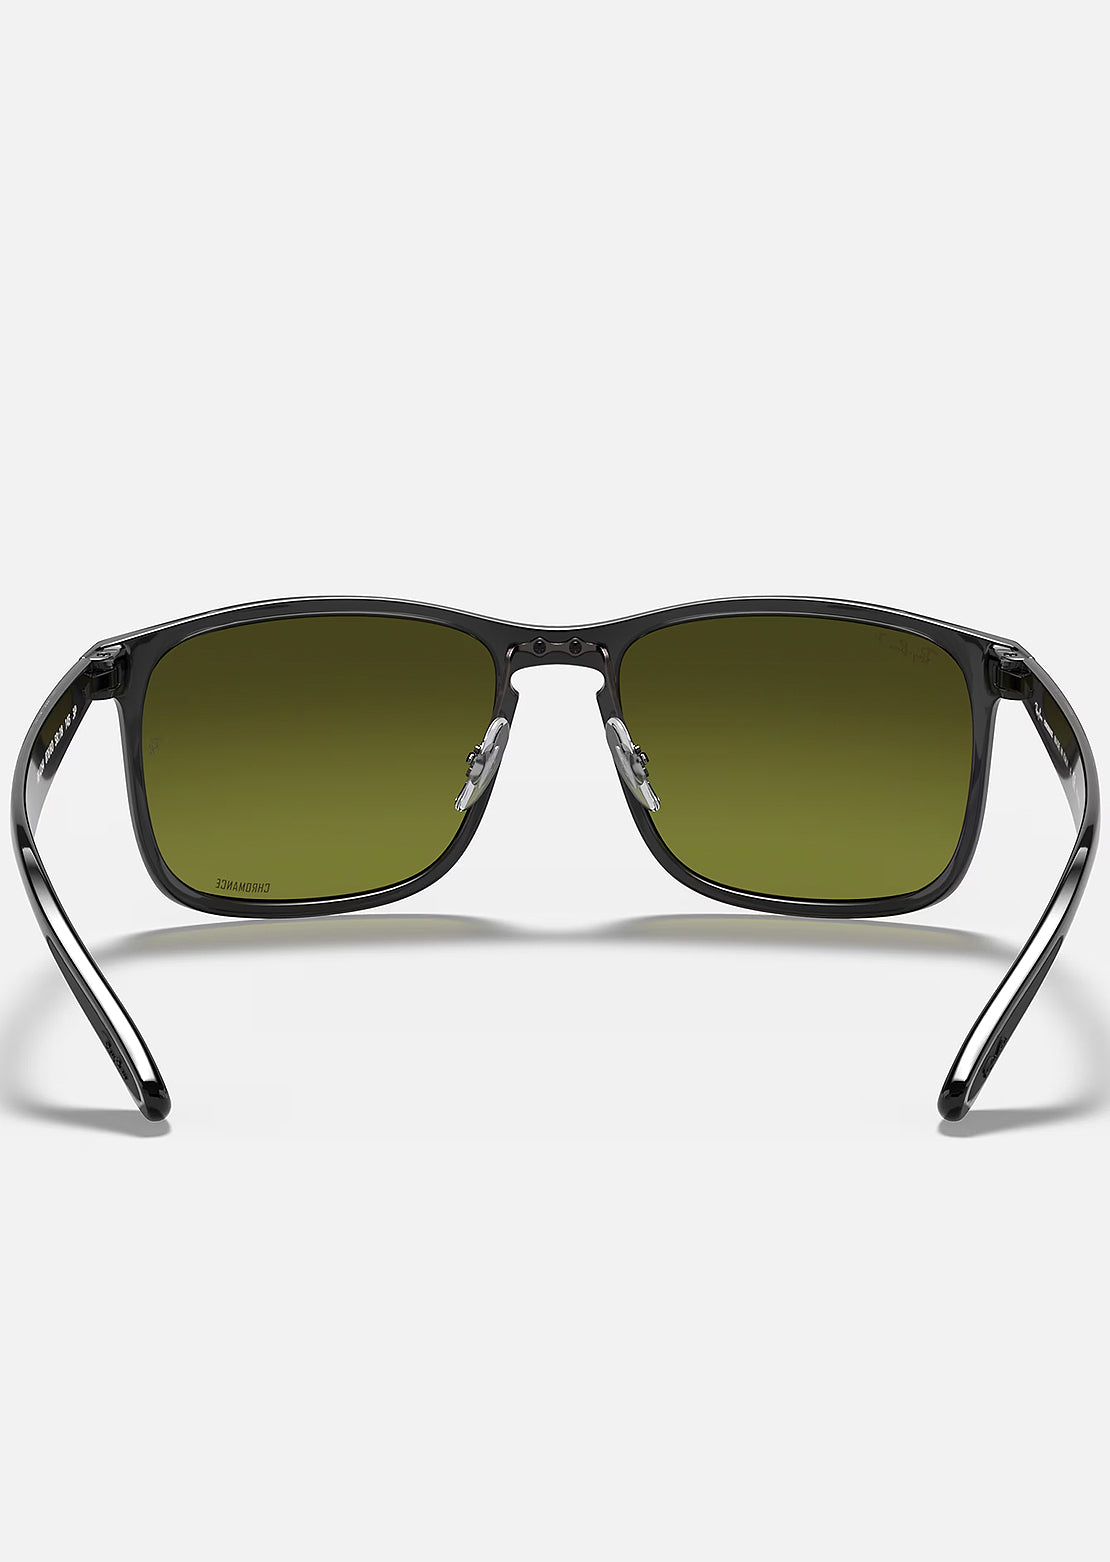 Ray-Ban Chromance RB4264 Sunglasses Grey/Green Mirror Gold Gradient